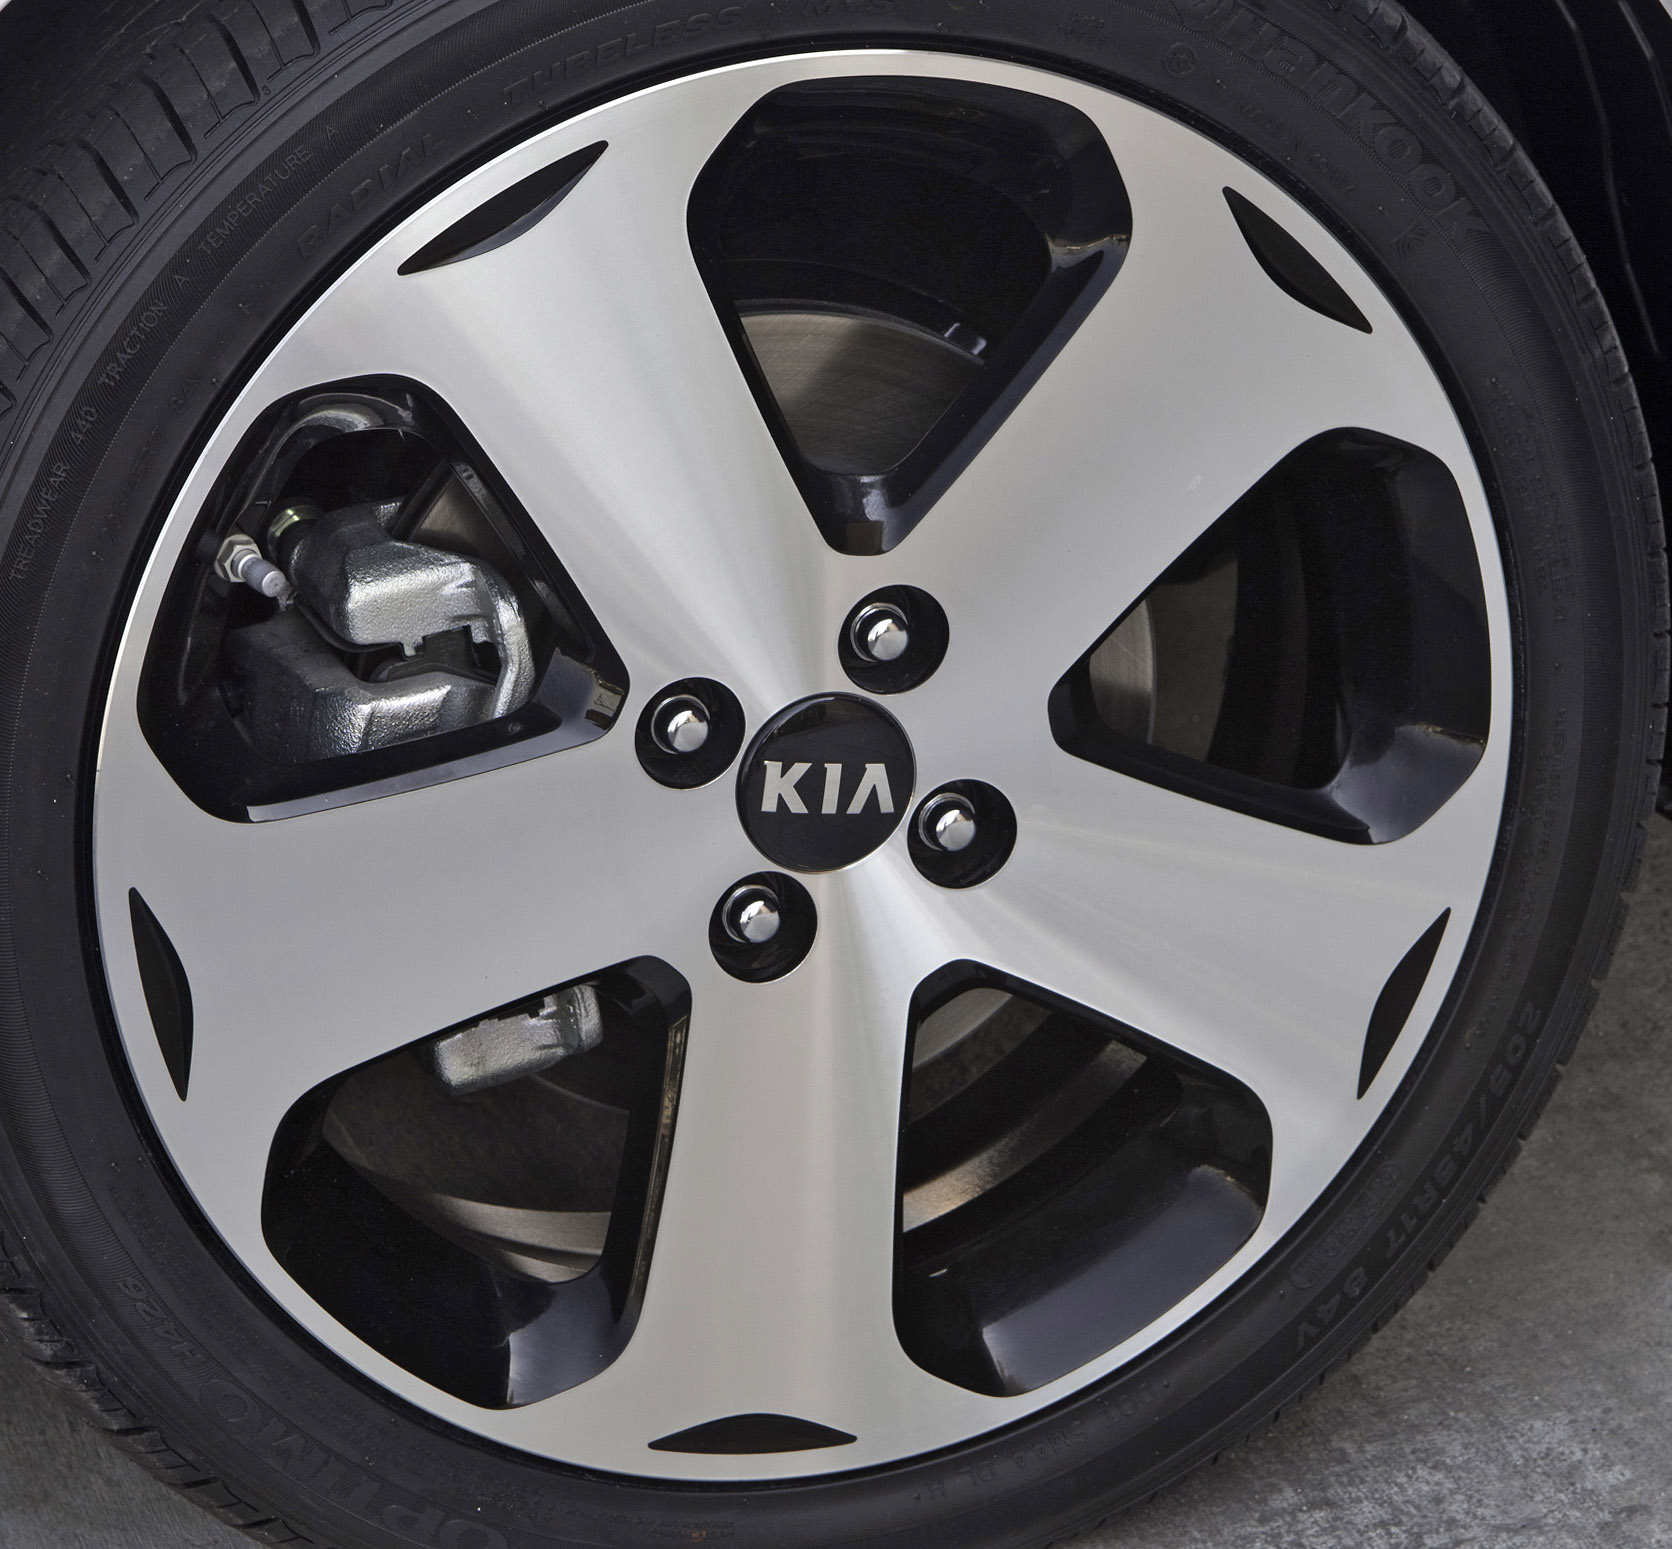 2013 kia rio hatchback tire size